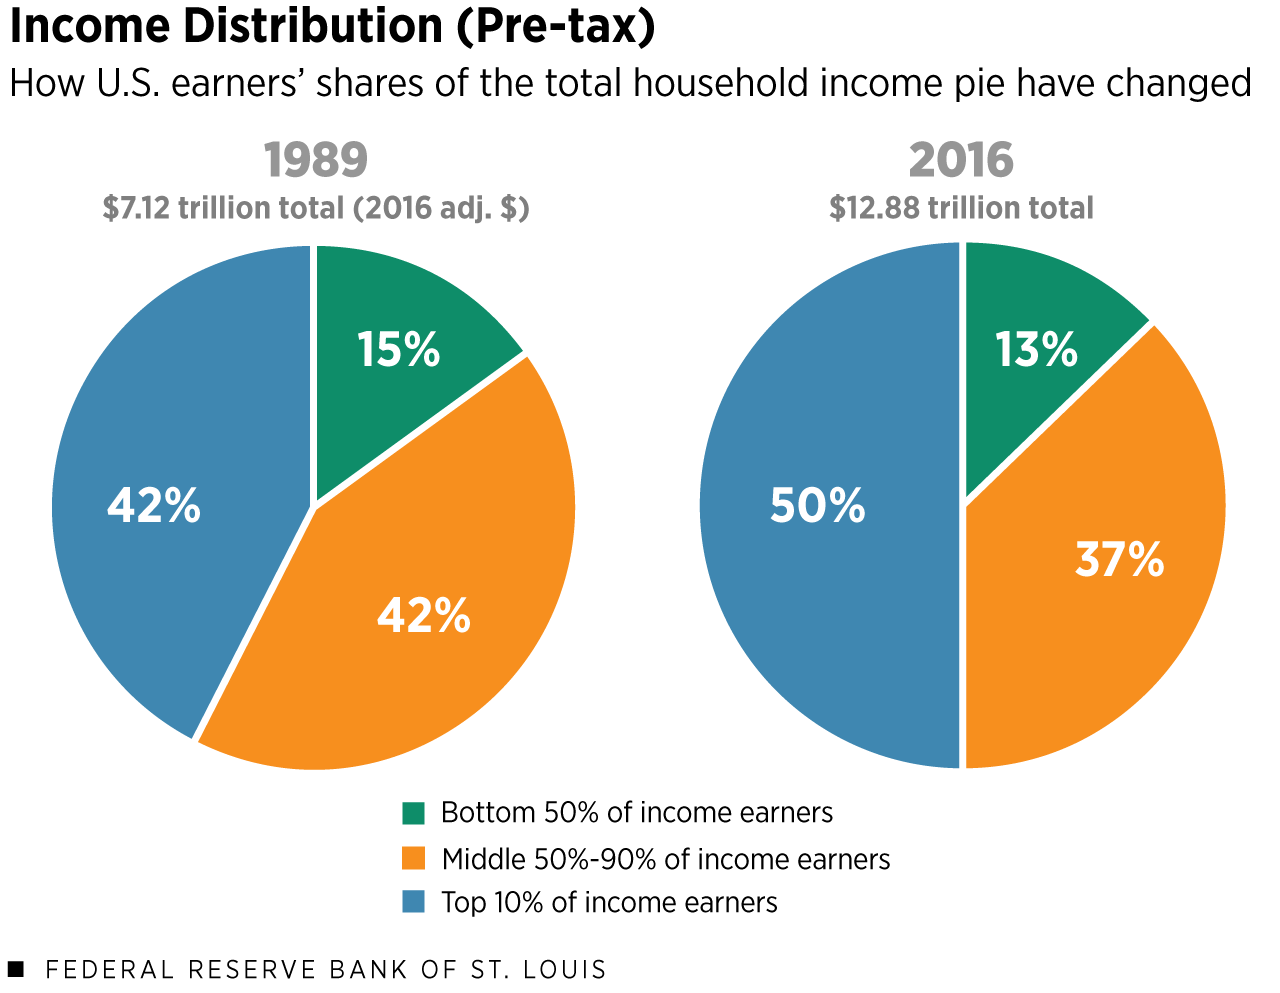 U.S. Household Income Distribution, Top 10% vs. Bottom 50% (pie charts).